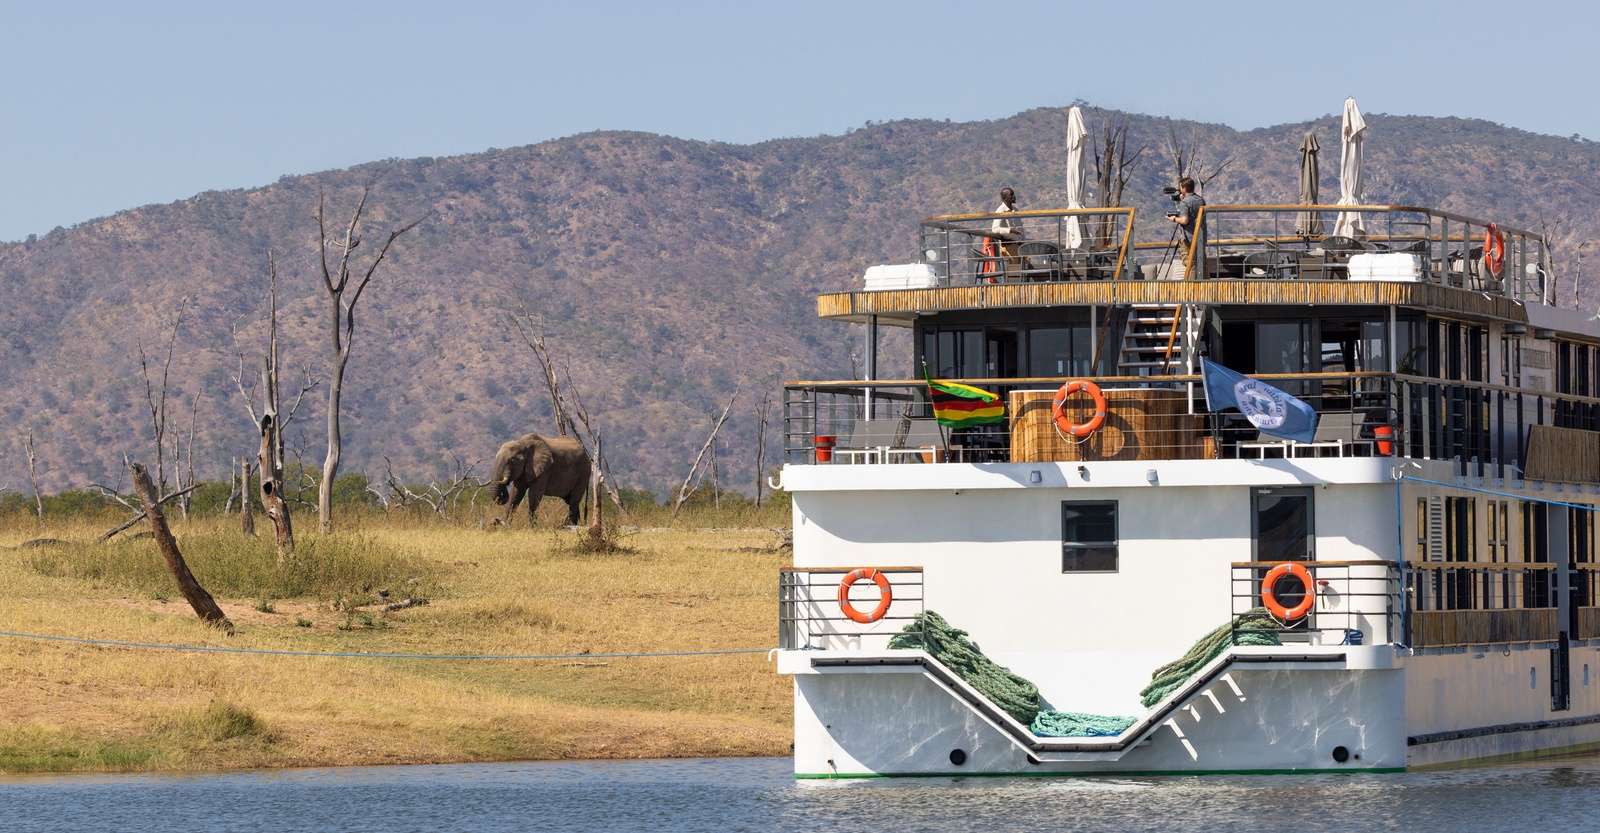 Nat Hab guest aboard the Zimbabwean Dream with elephant, Lake Kariba, Zimbabwe.